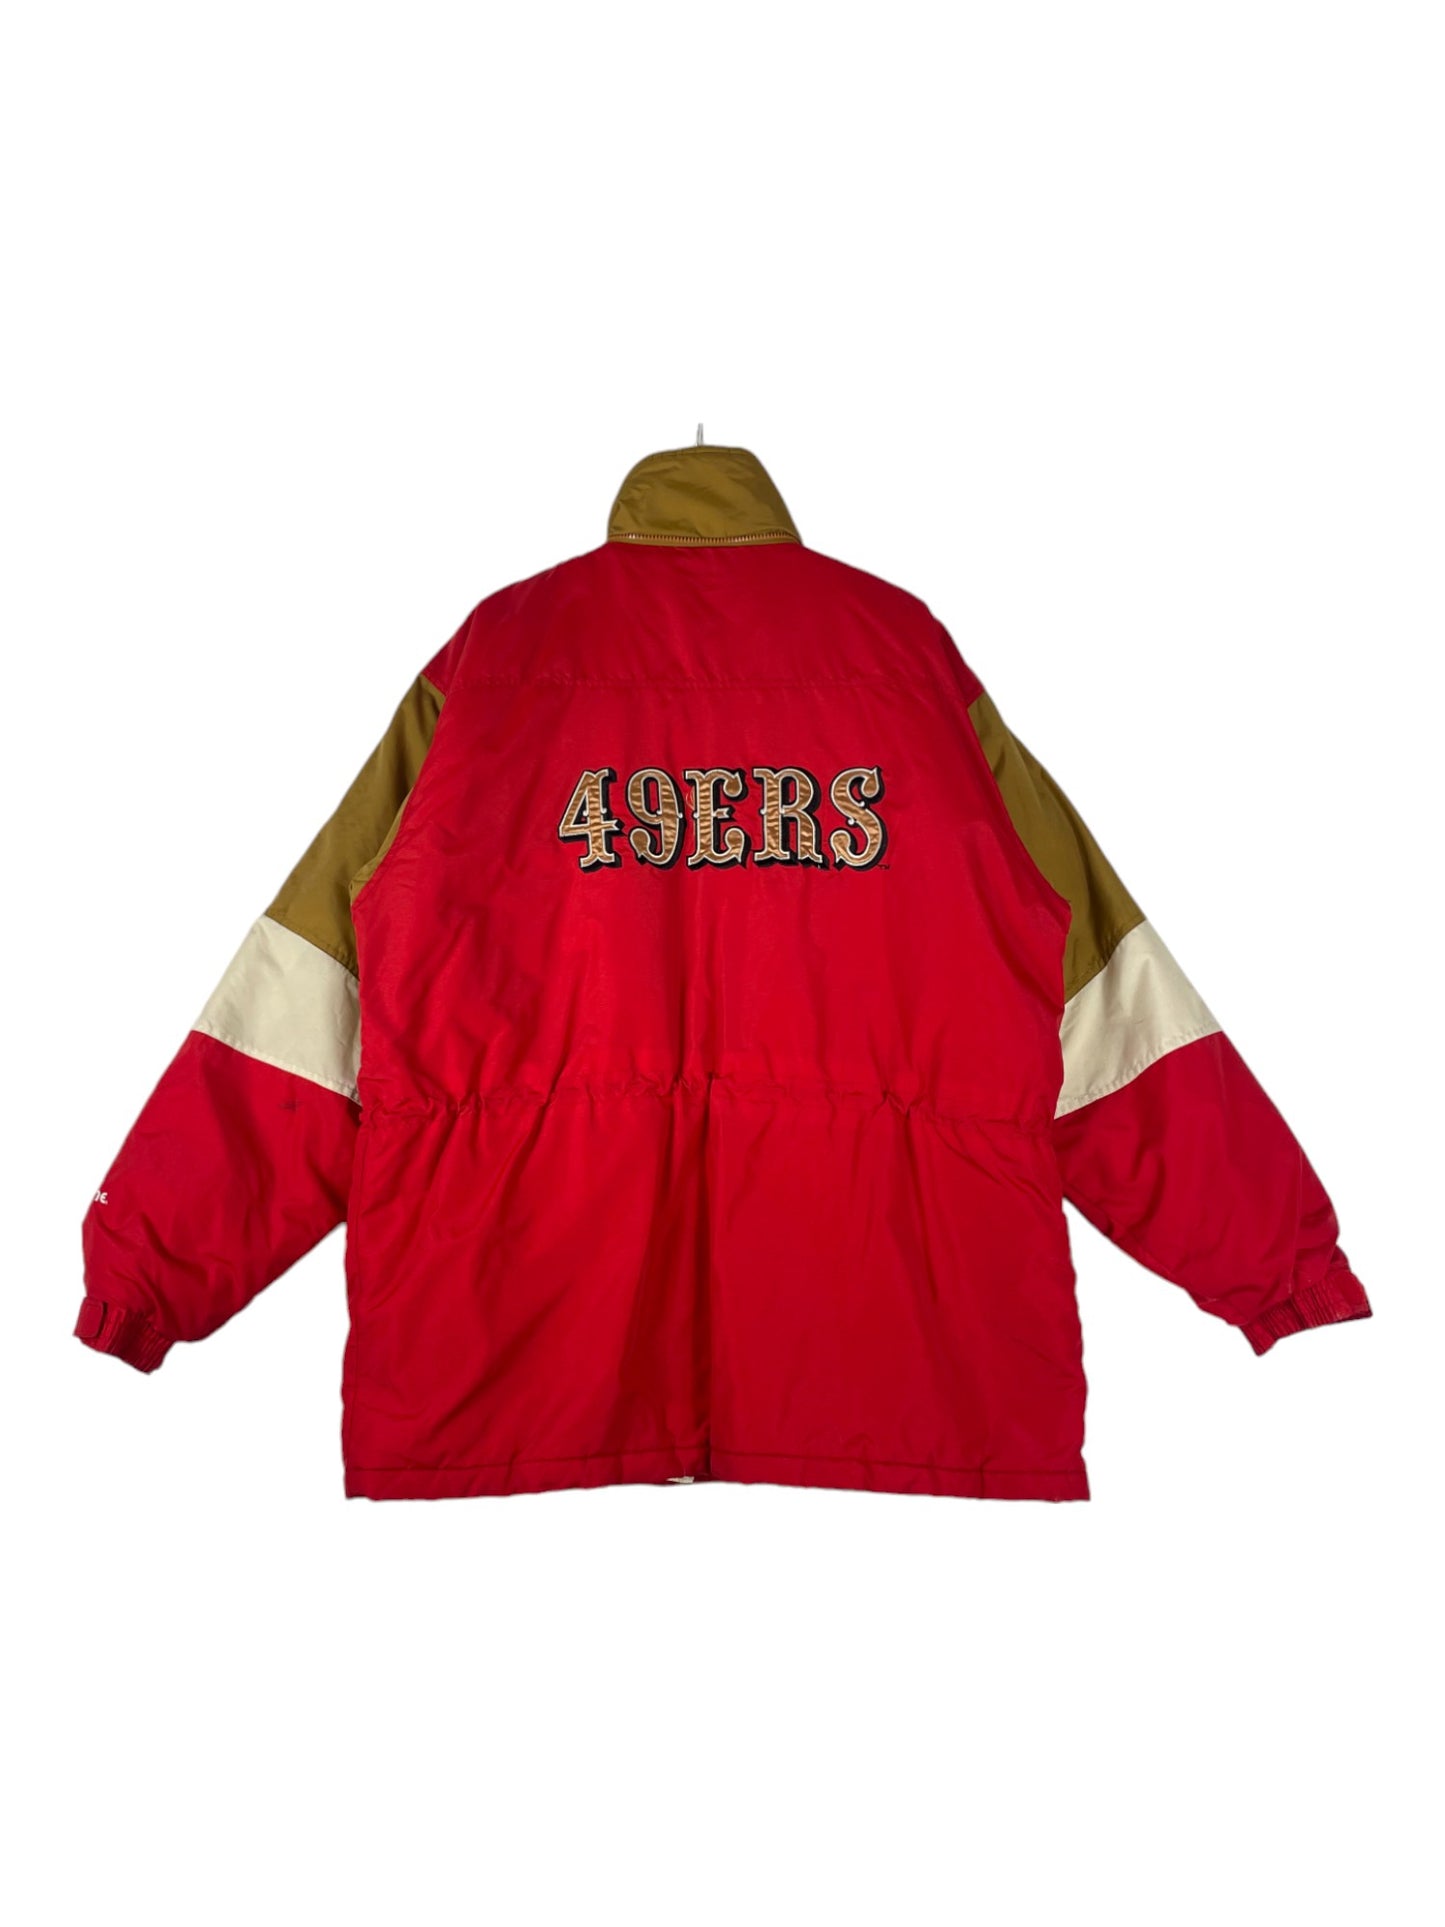 49ERS Jacket